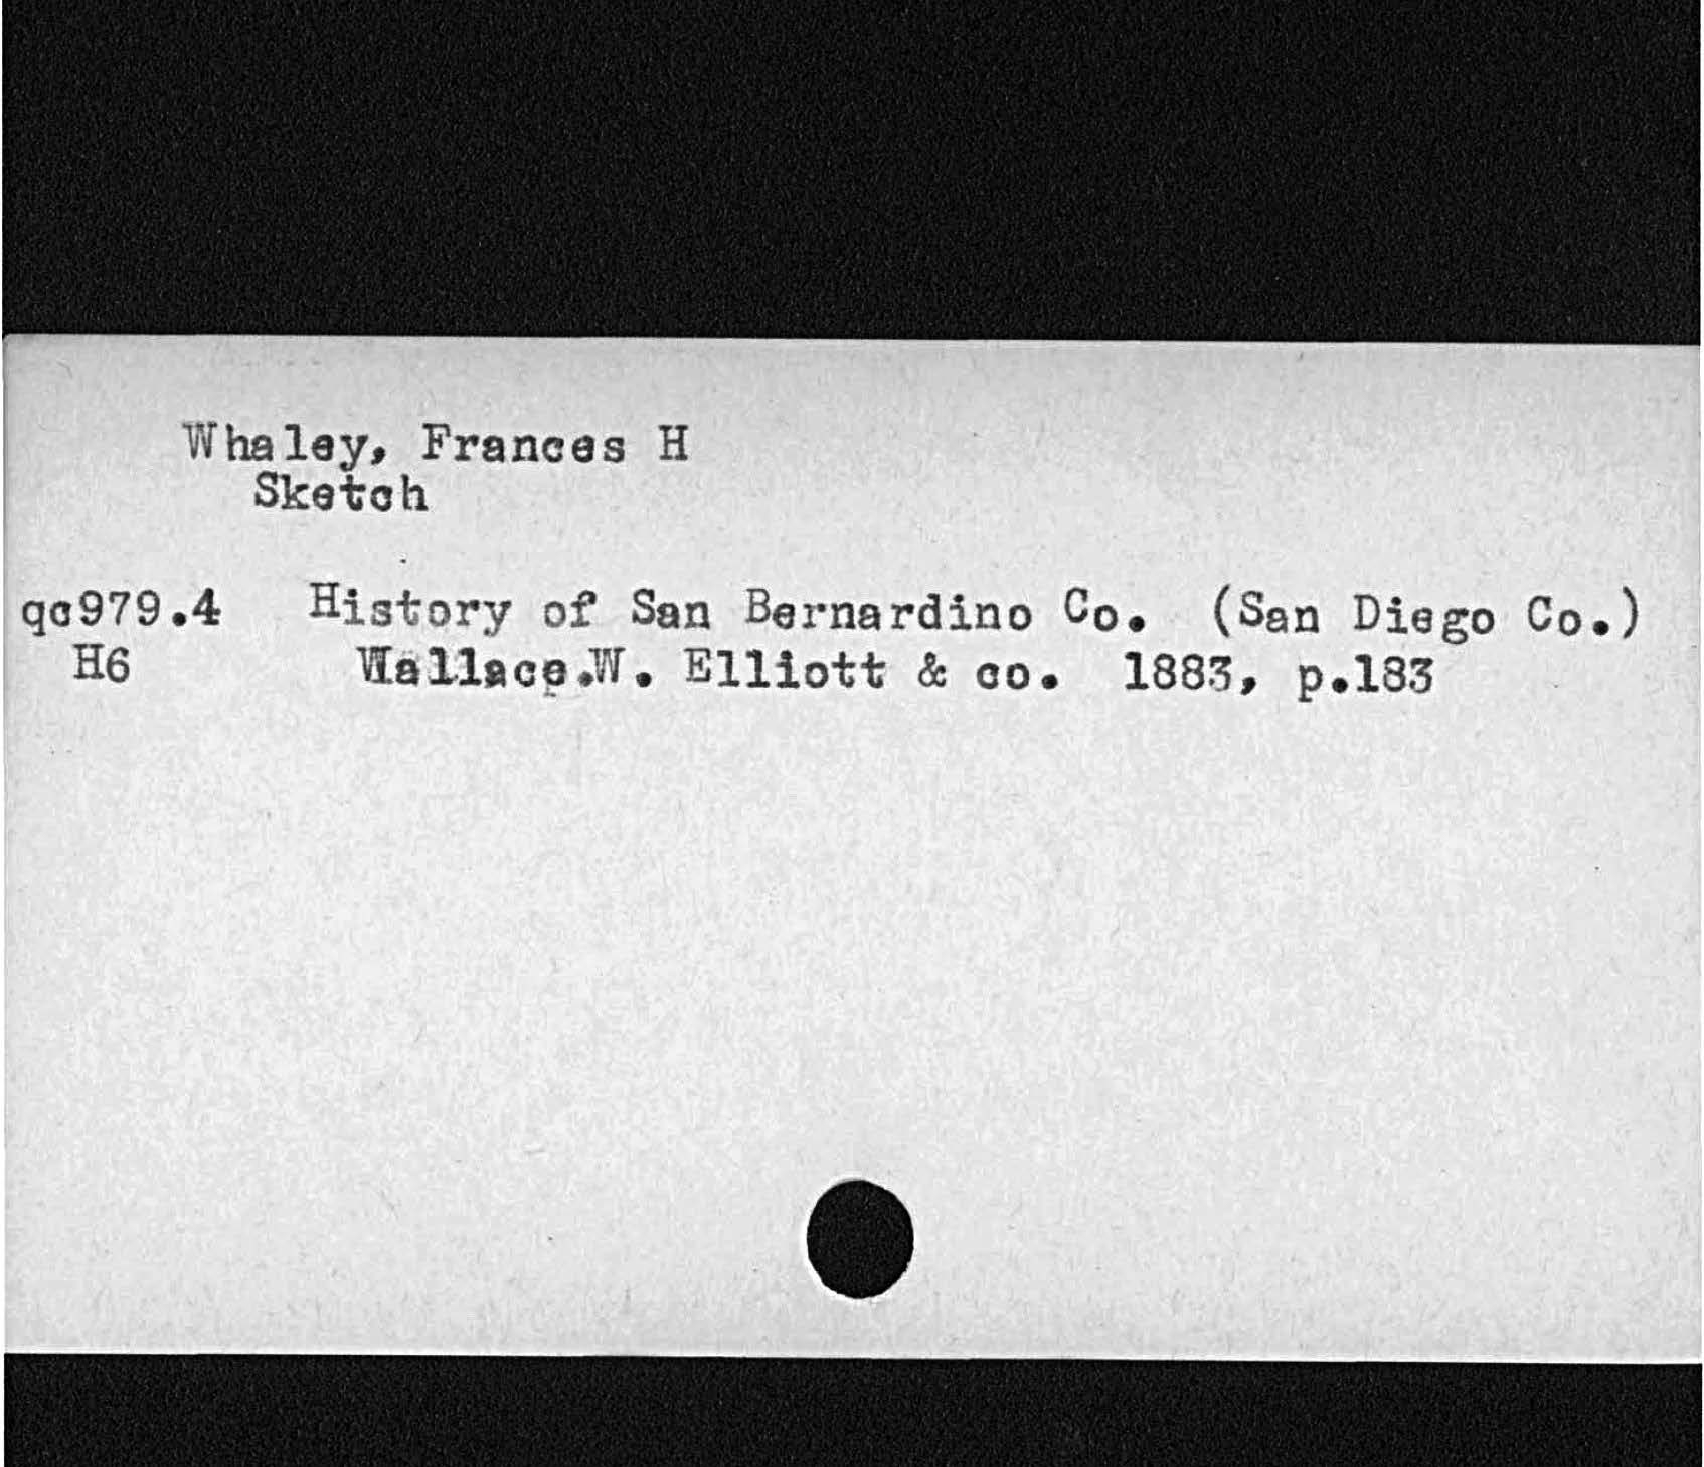 Whaley, HSketchHistory of San Bernardino Co. San Diego Co.Wallace w. Elliott& no 1883, p. l83   qo979. 4  H6